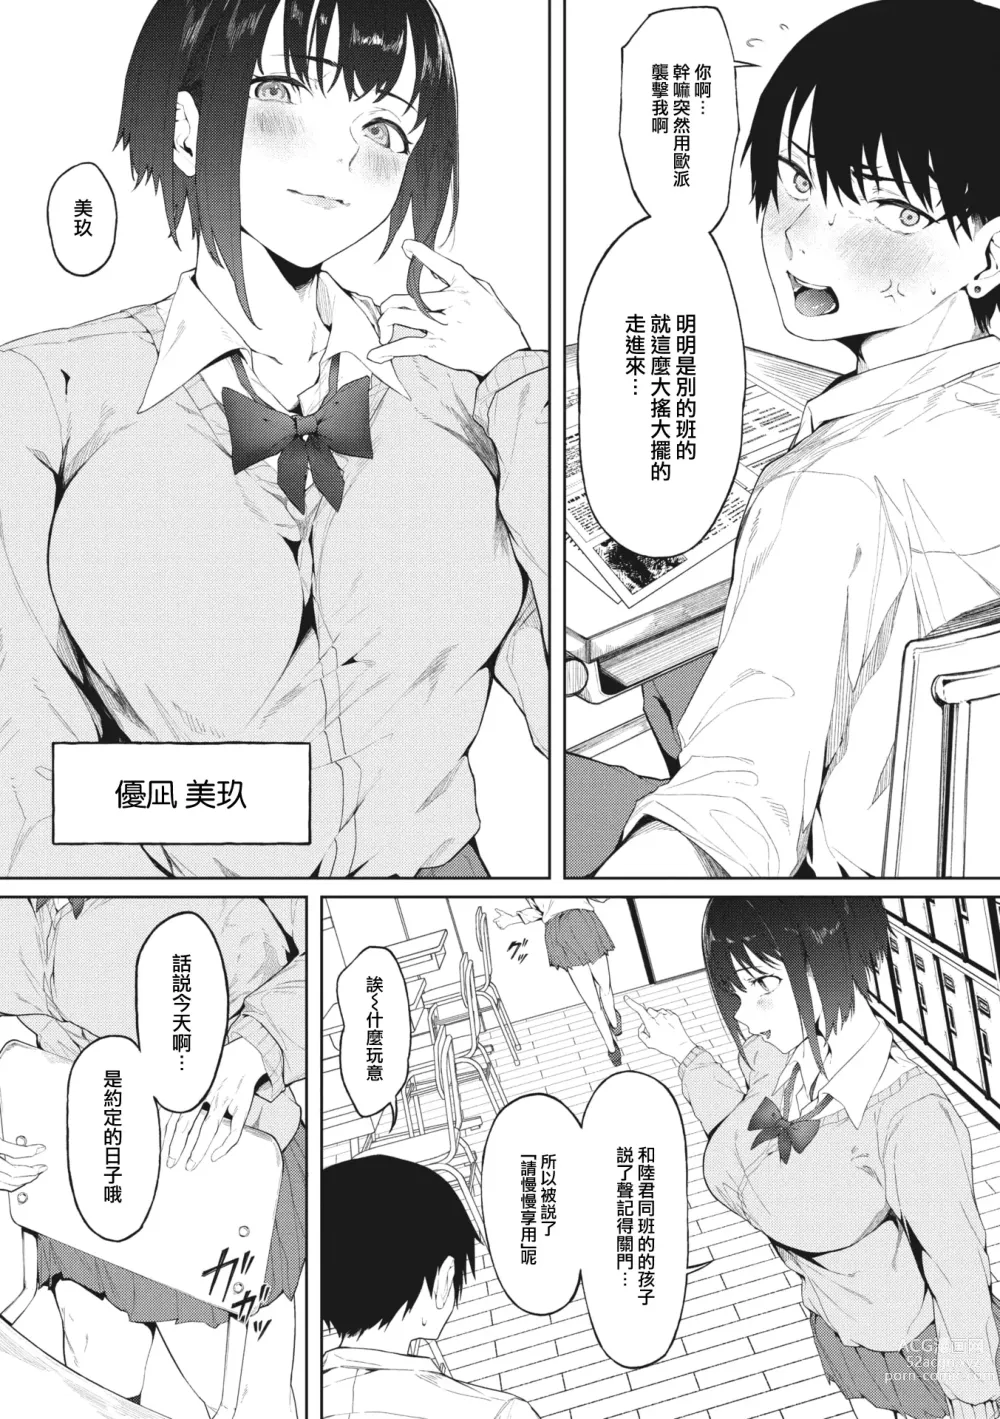 Page 3 of manga 100-Ten no Gohoubi